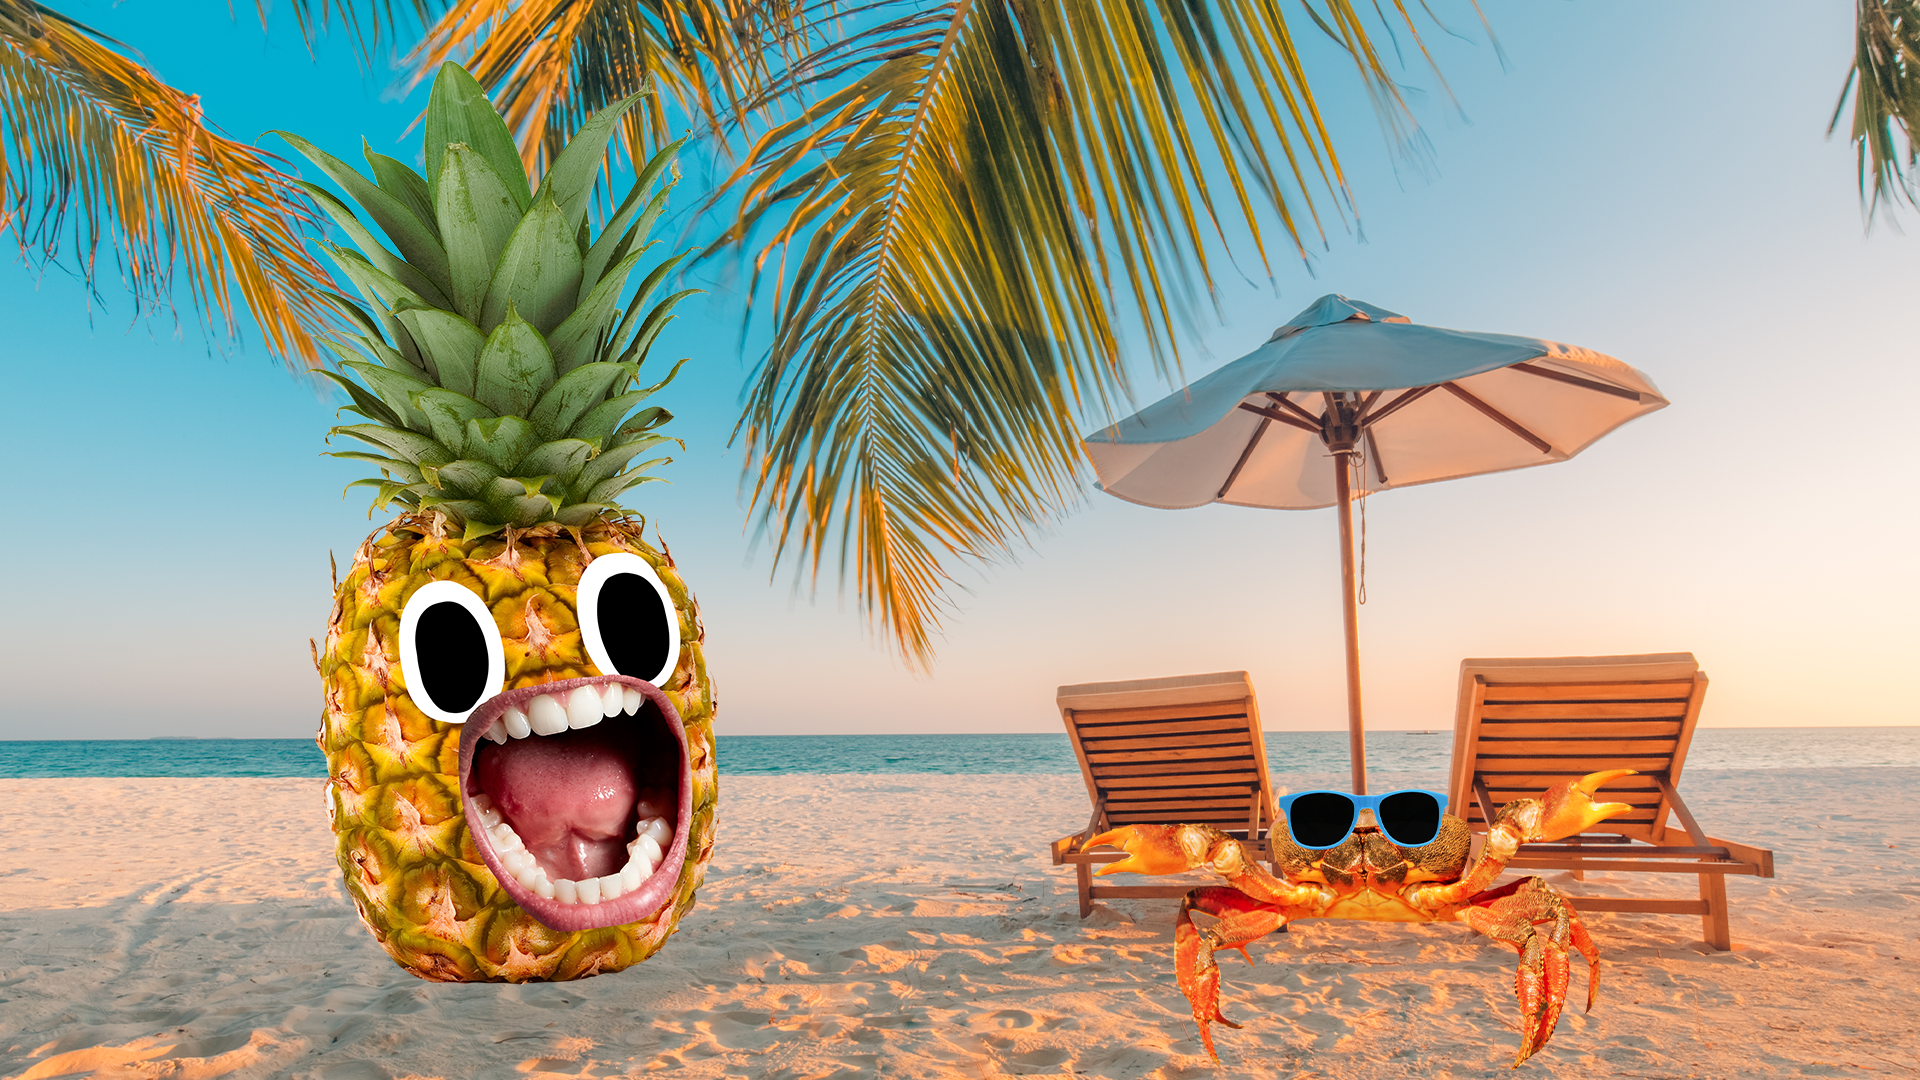 Beano crab and pineapple on tropical beach